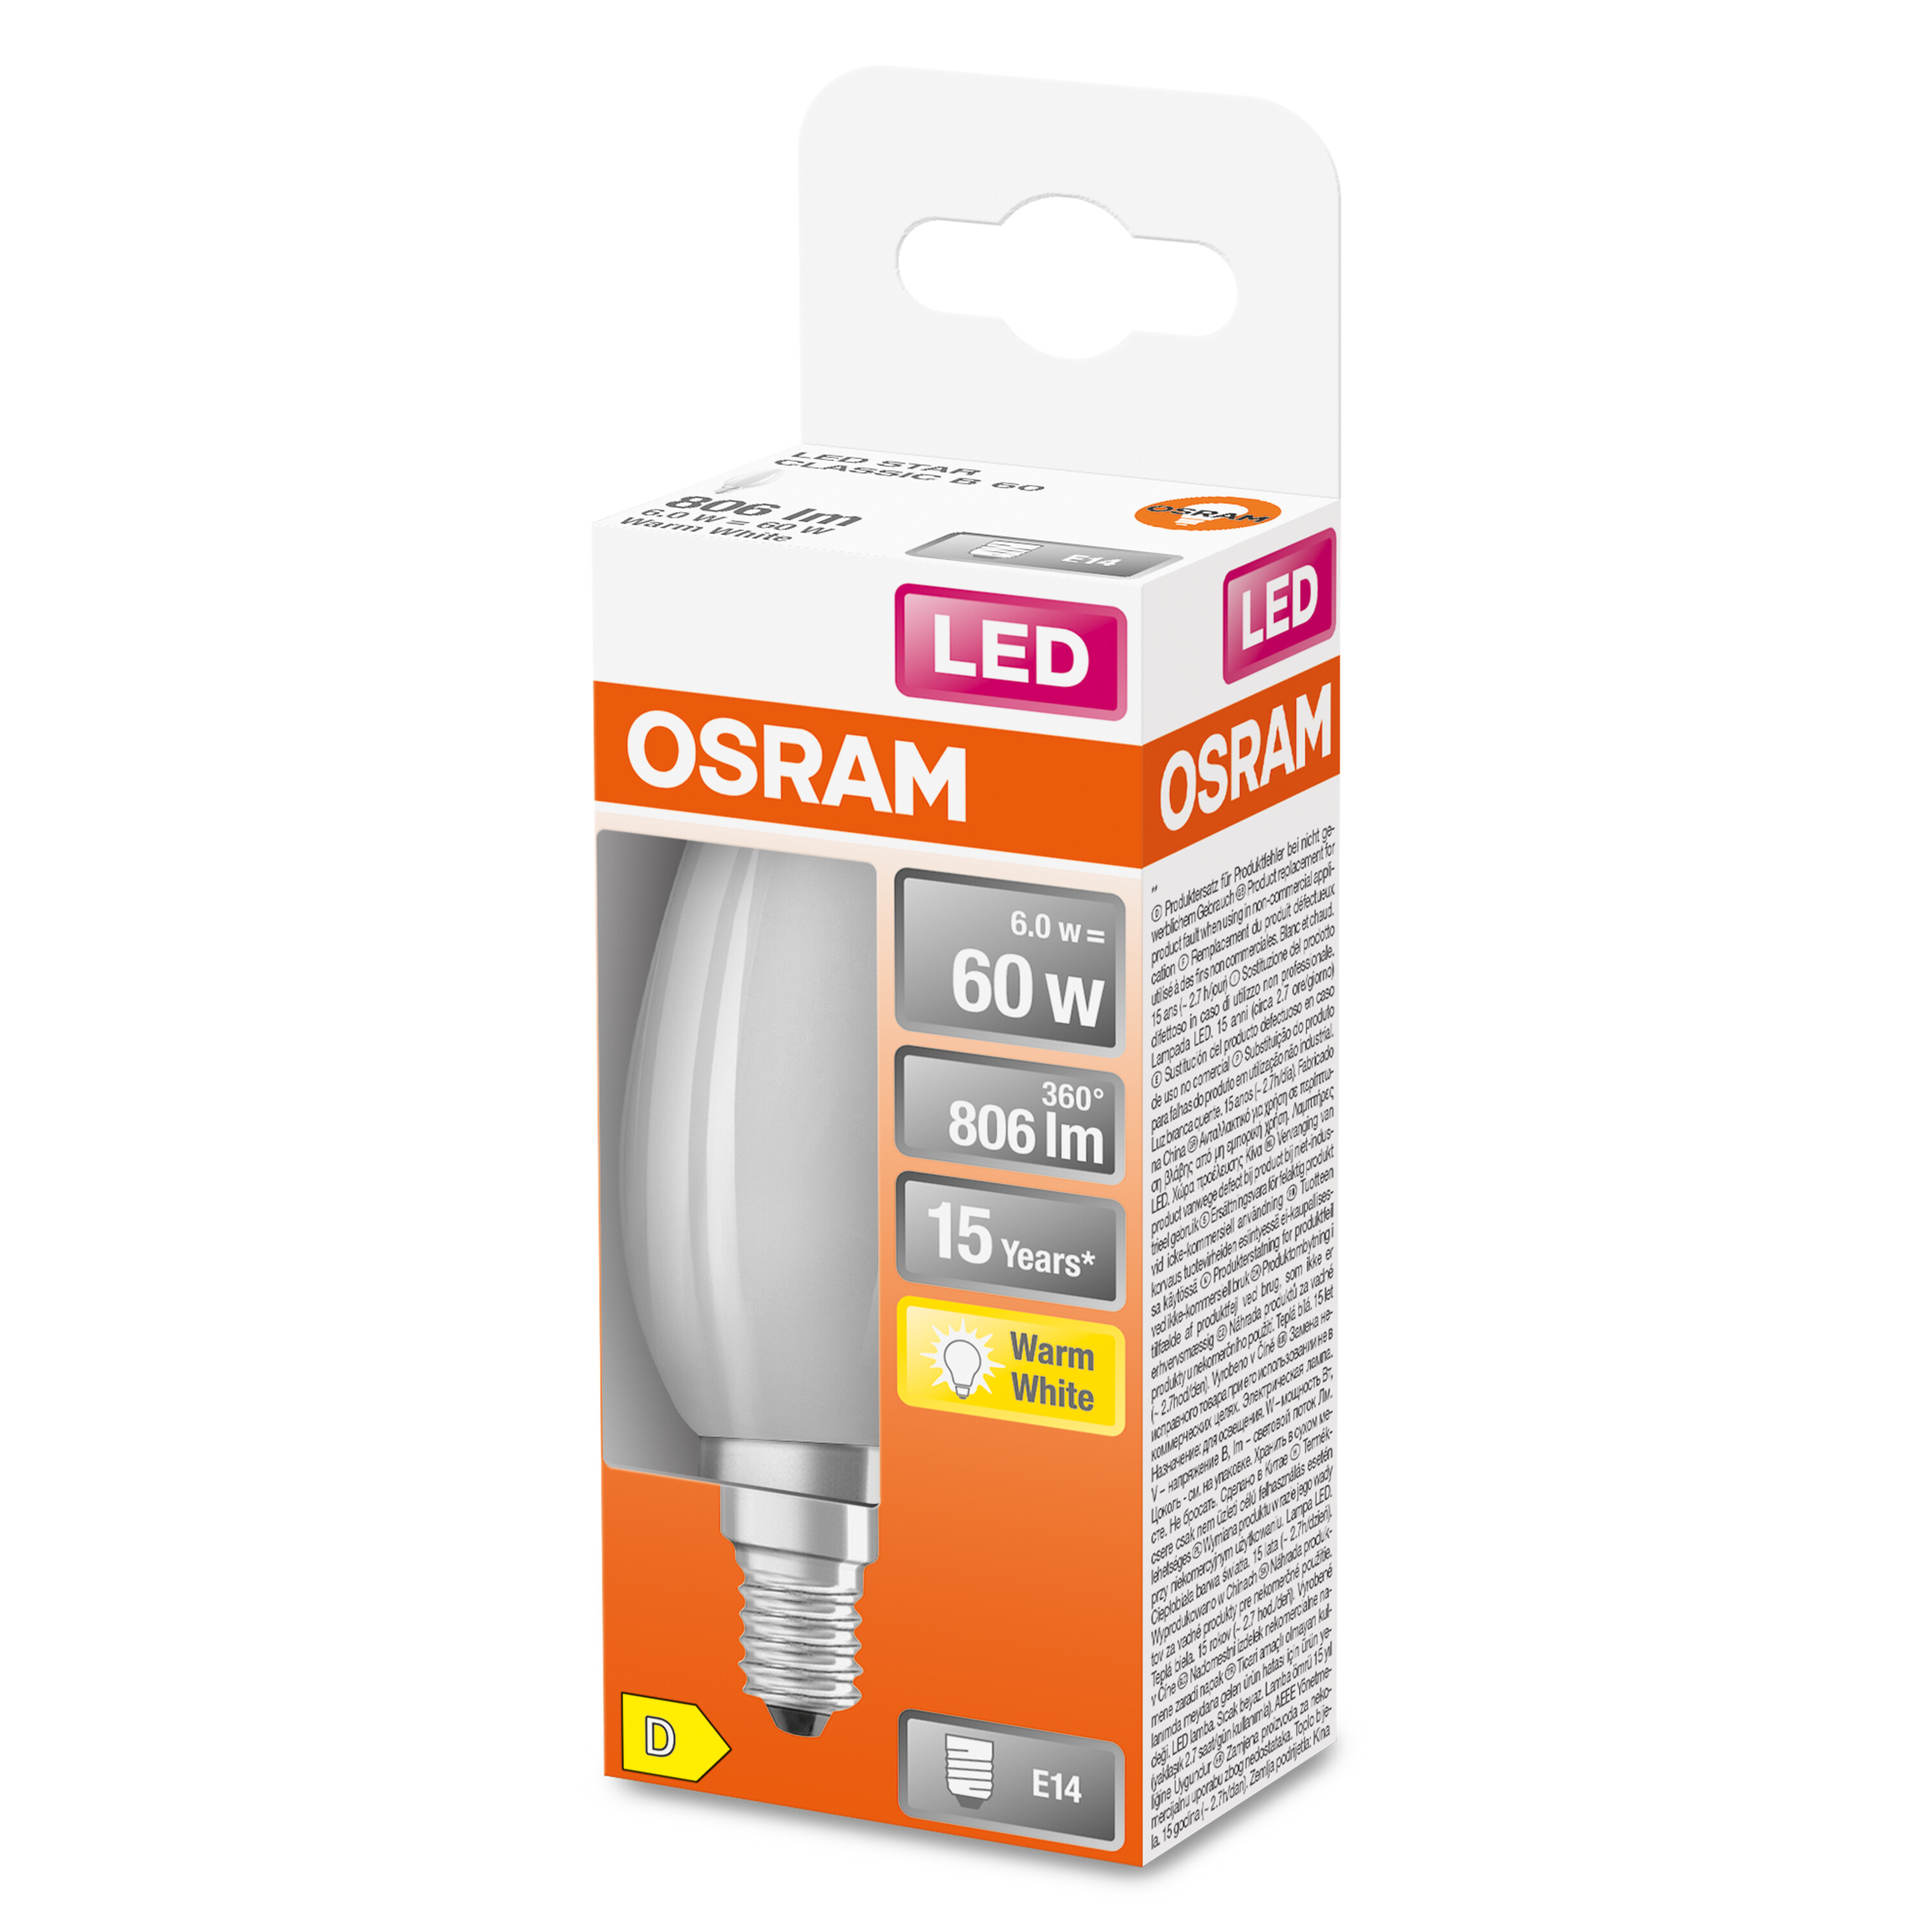 OSRAM  LED Retrofit CLASSIC Lumen 806 Warmweiß Lampe B LED